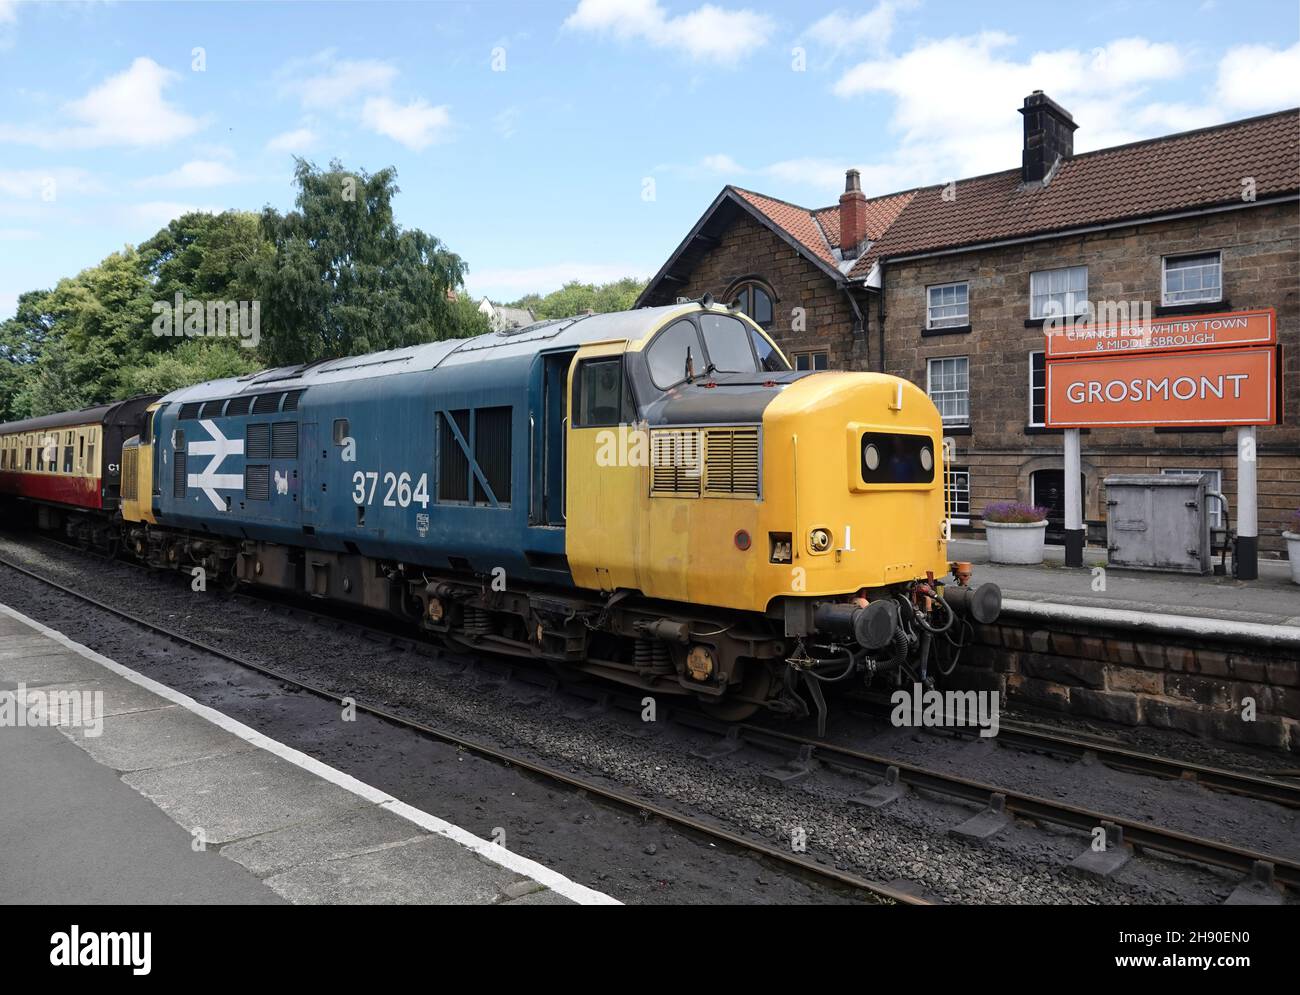 GROSMONT, UNITED KINGDOM - Aug 16, 2021: A vintage InterCity diesel locomotive at Grosmont Station on the North Yorkshire Moors Railway, UK Stock Photo